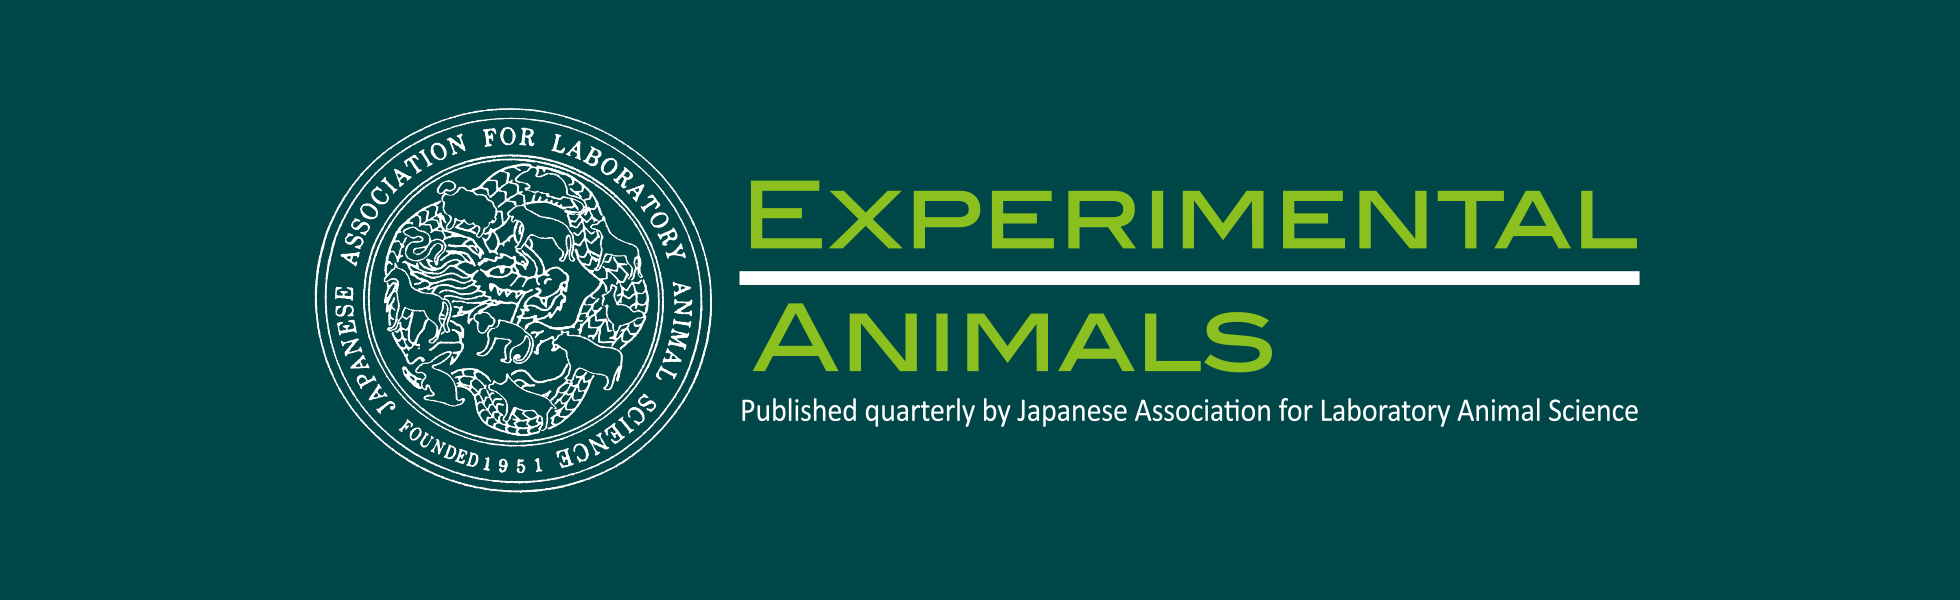 Experimental Animals